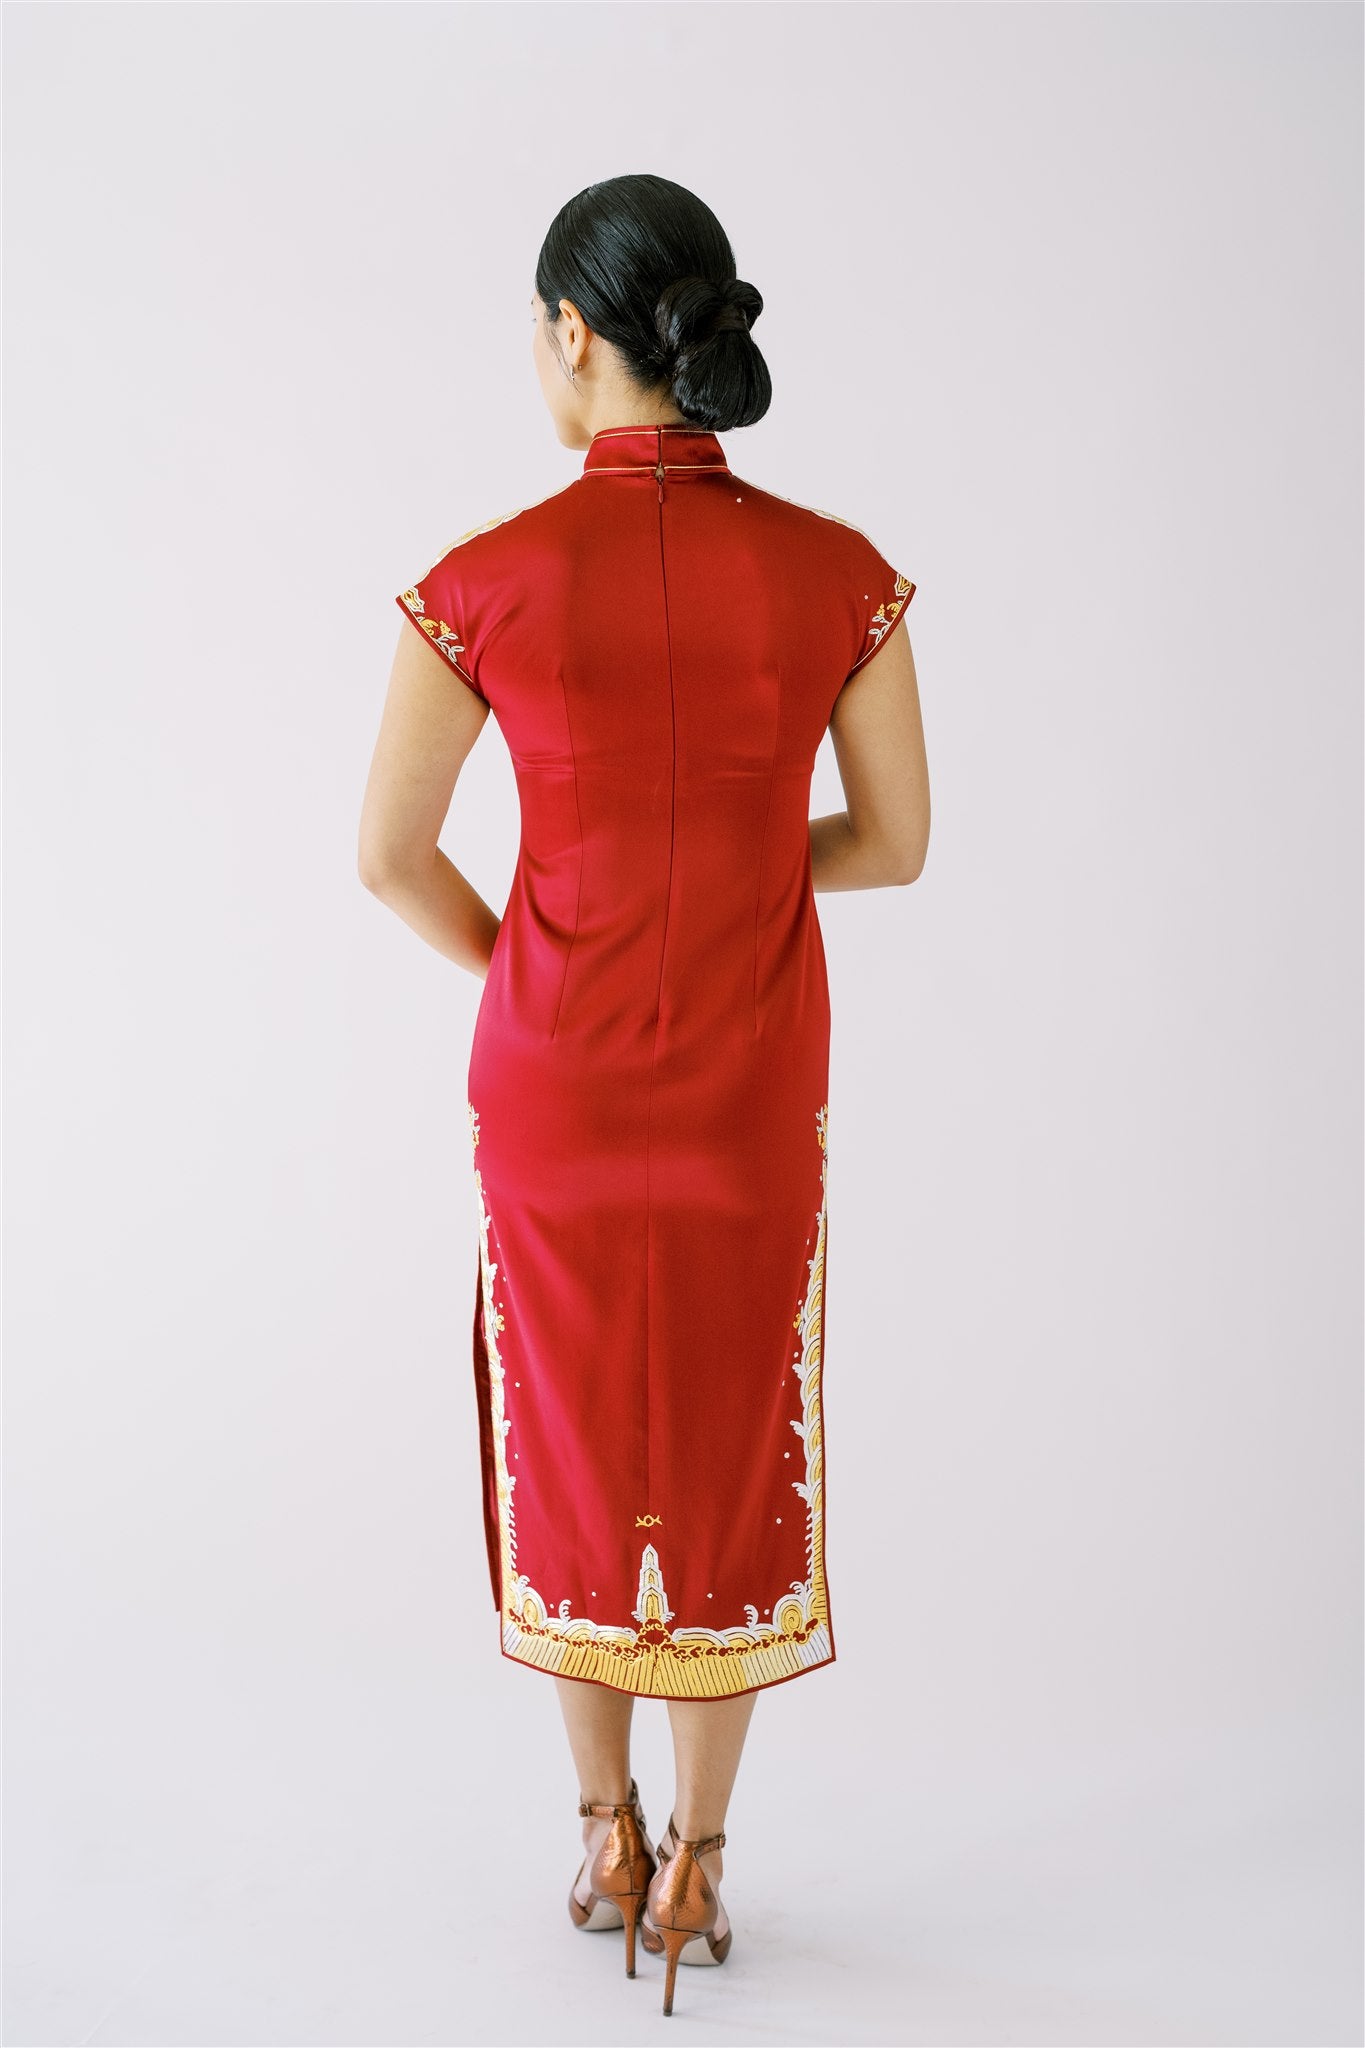 New Luxurious Red Satin Phoenix Chinese Long Dress Cheongsam Qipao